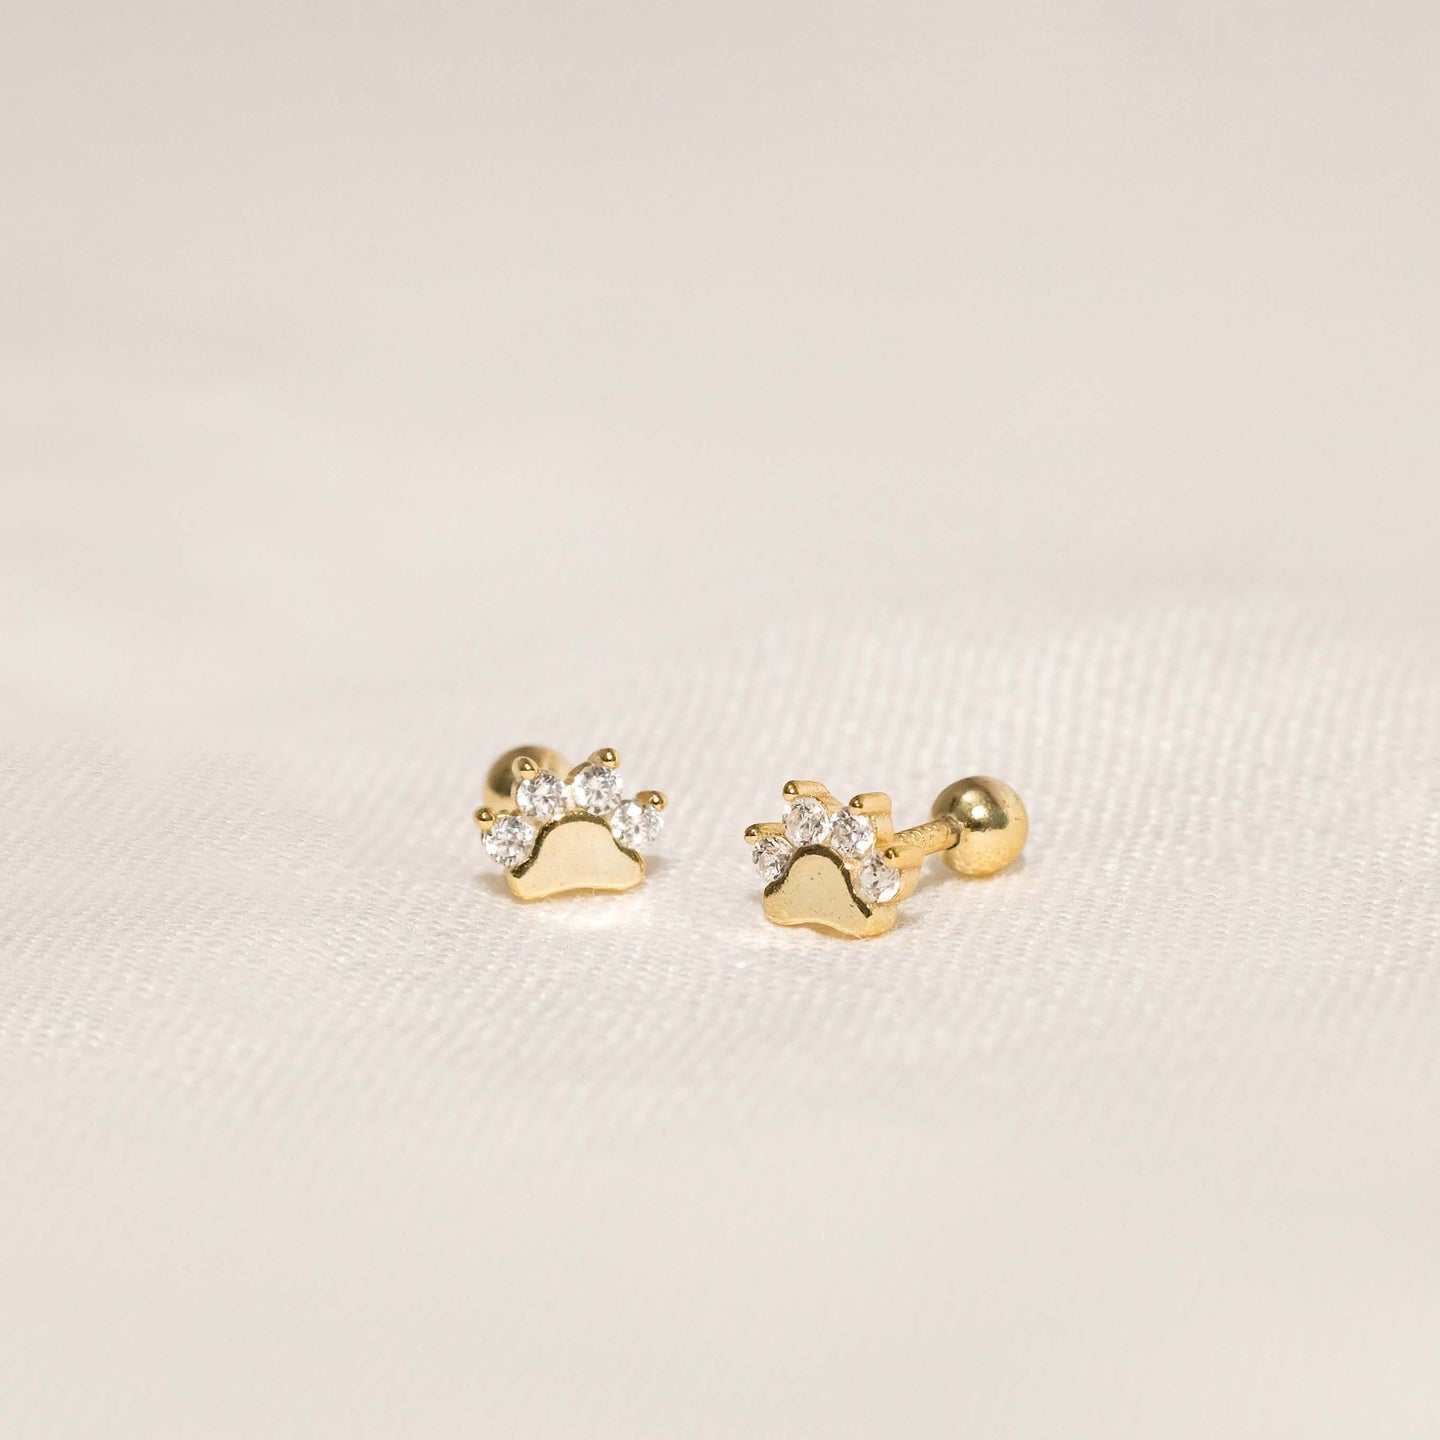 products/pup-cz-stud-earrings-18k-gold-vermeil-1.jpg